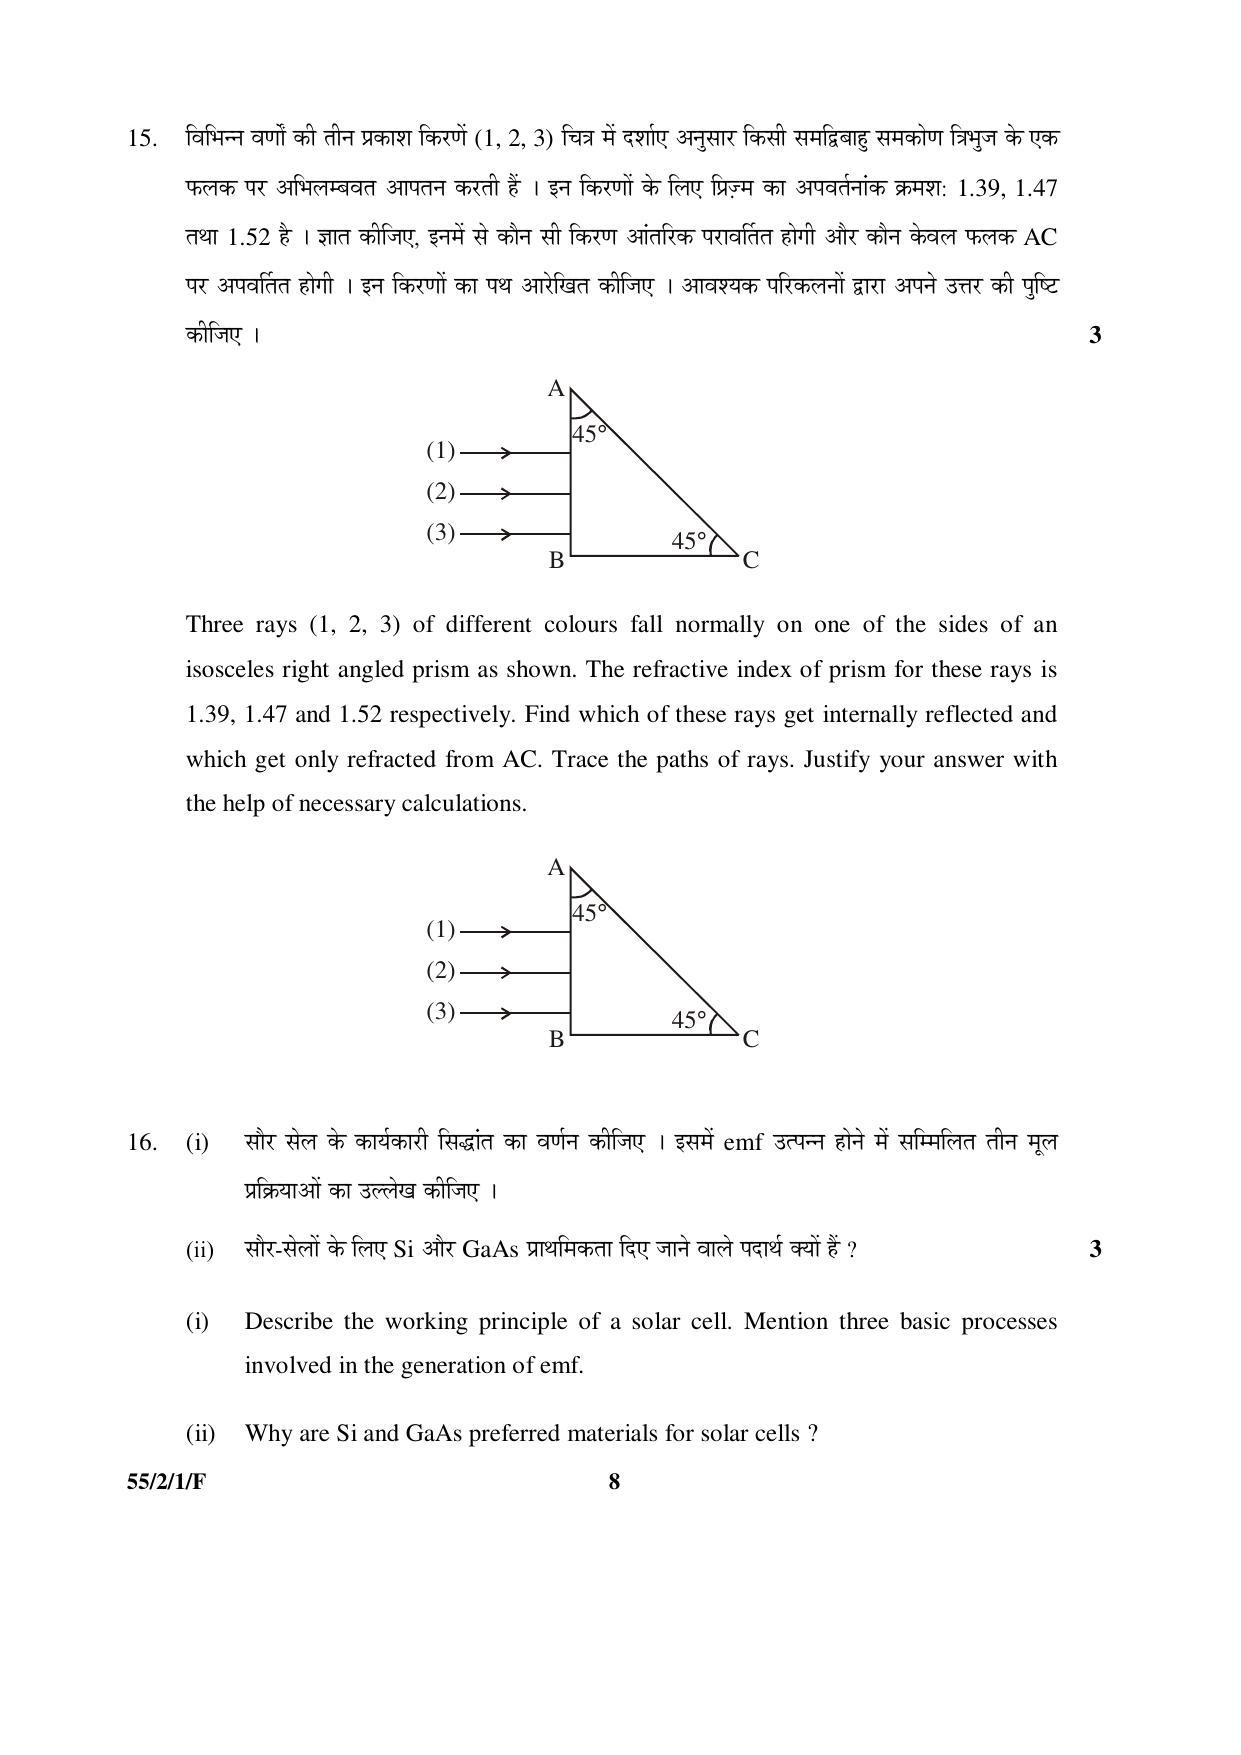 CBSE Class 12 55-2-1-F _Physics_SET-1 2016 Question Paper - Page 8